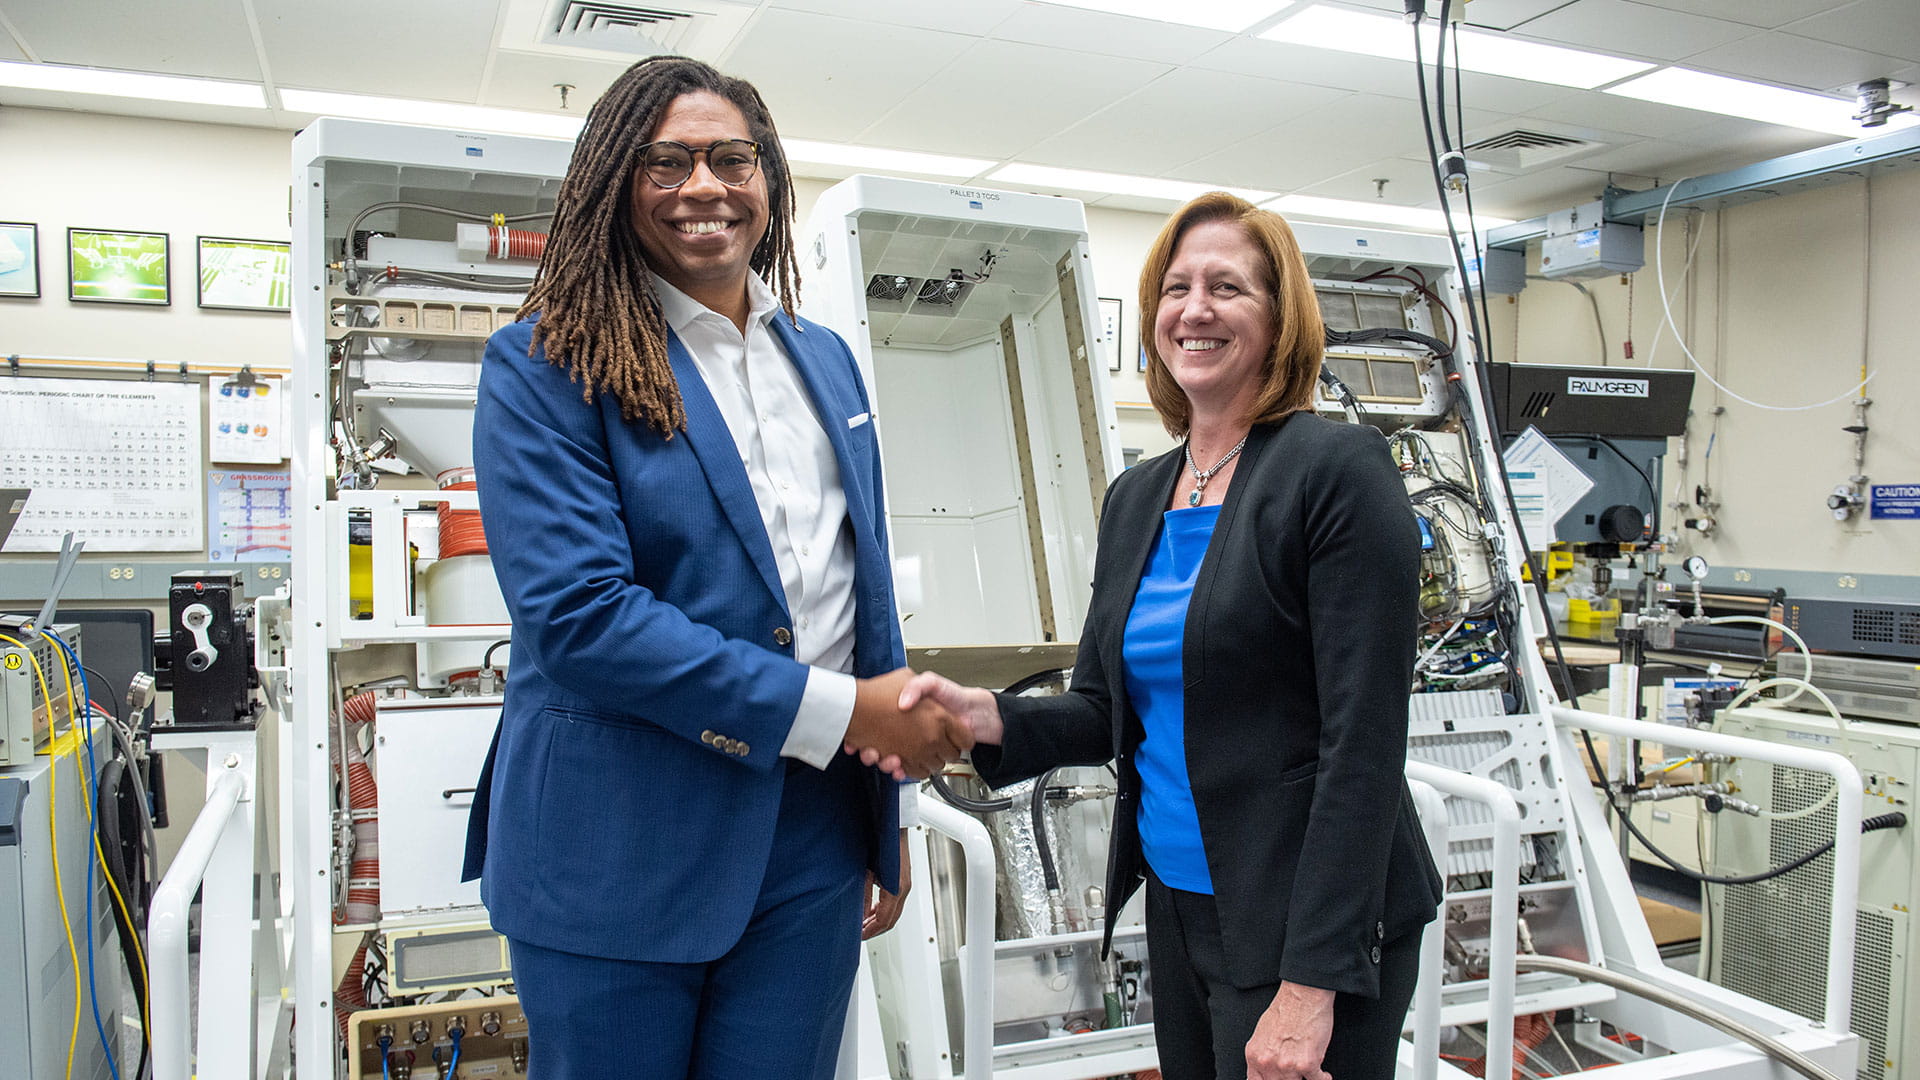 NASA representative visits Collins lab